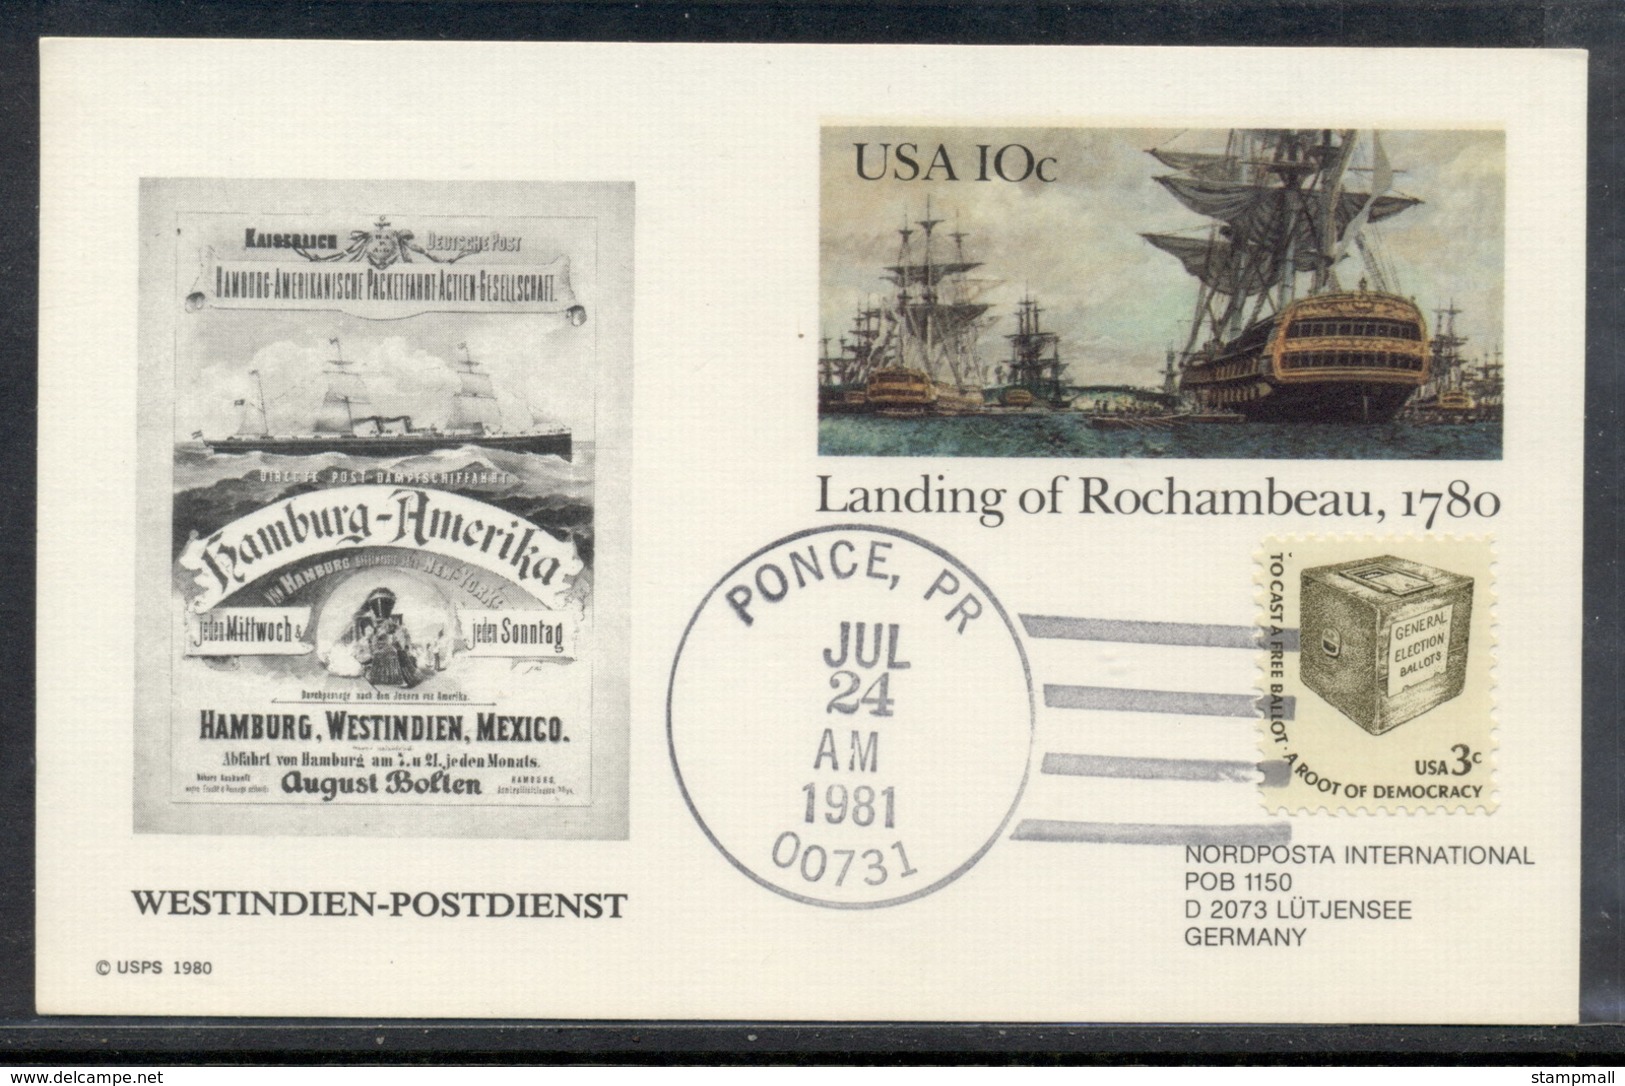 USA 1981 Landing Of Rochambeau PSE  Hamburg-Westindien Souvenir Cover - Event Covers